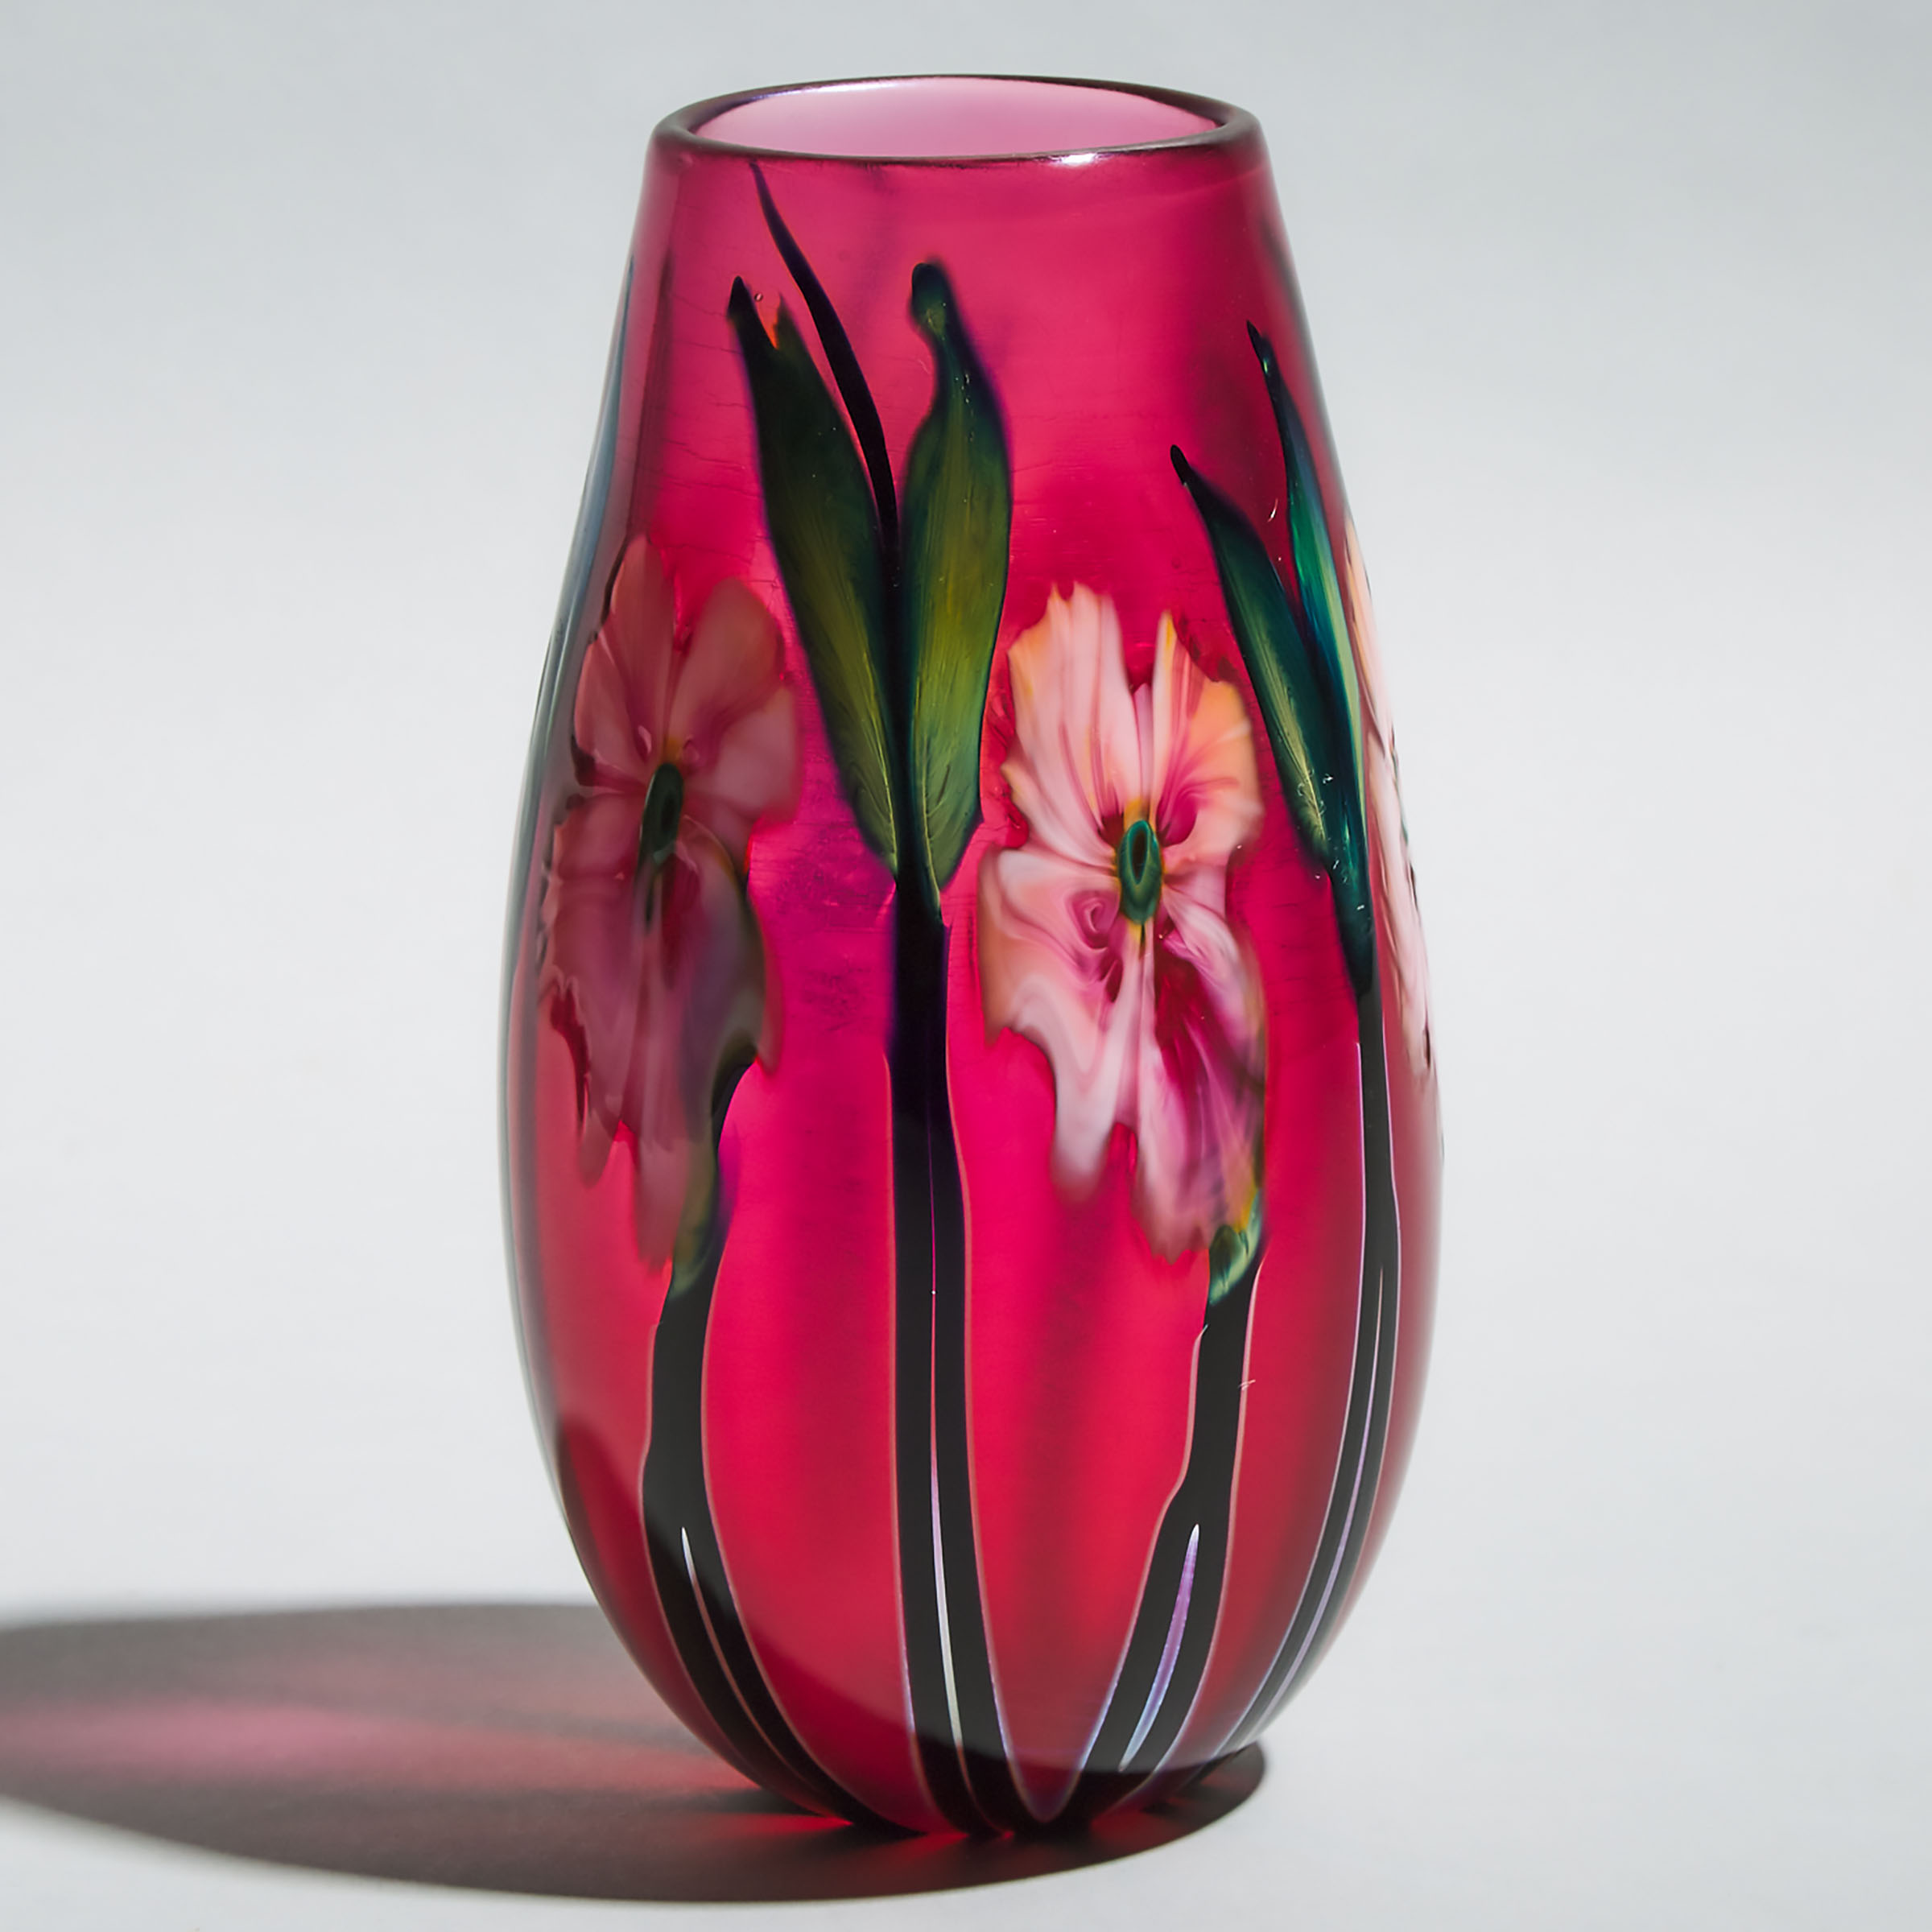 Charles Lotton (American, b.1935), 'Multi-Flora' Glass Vase, dated 1993